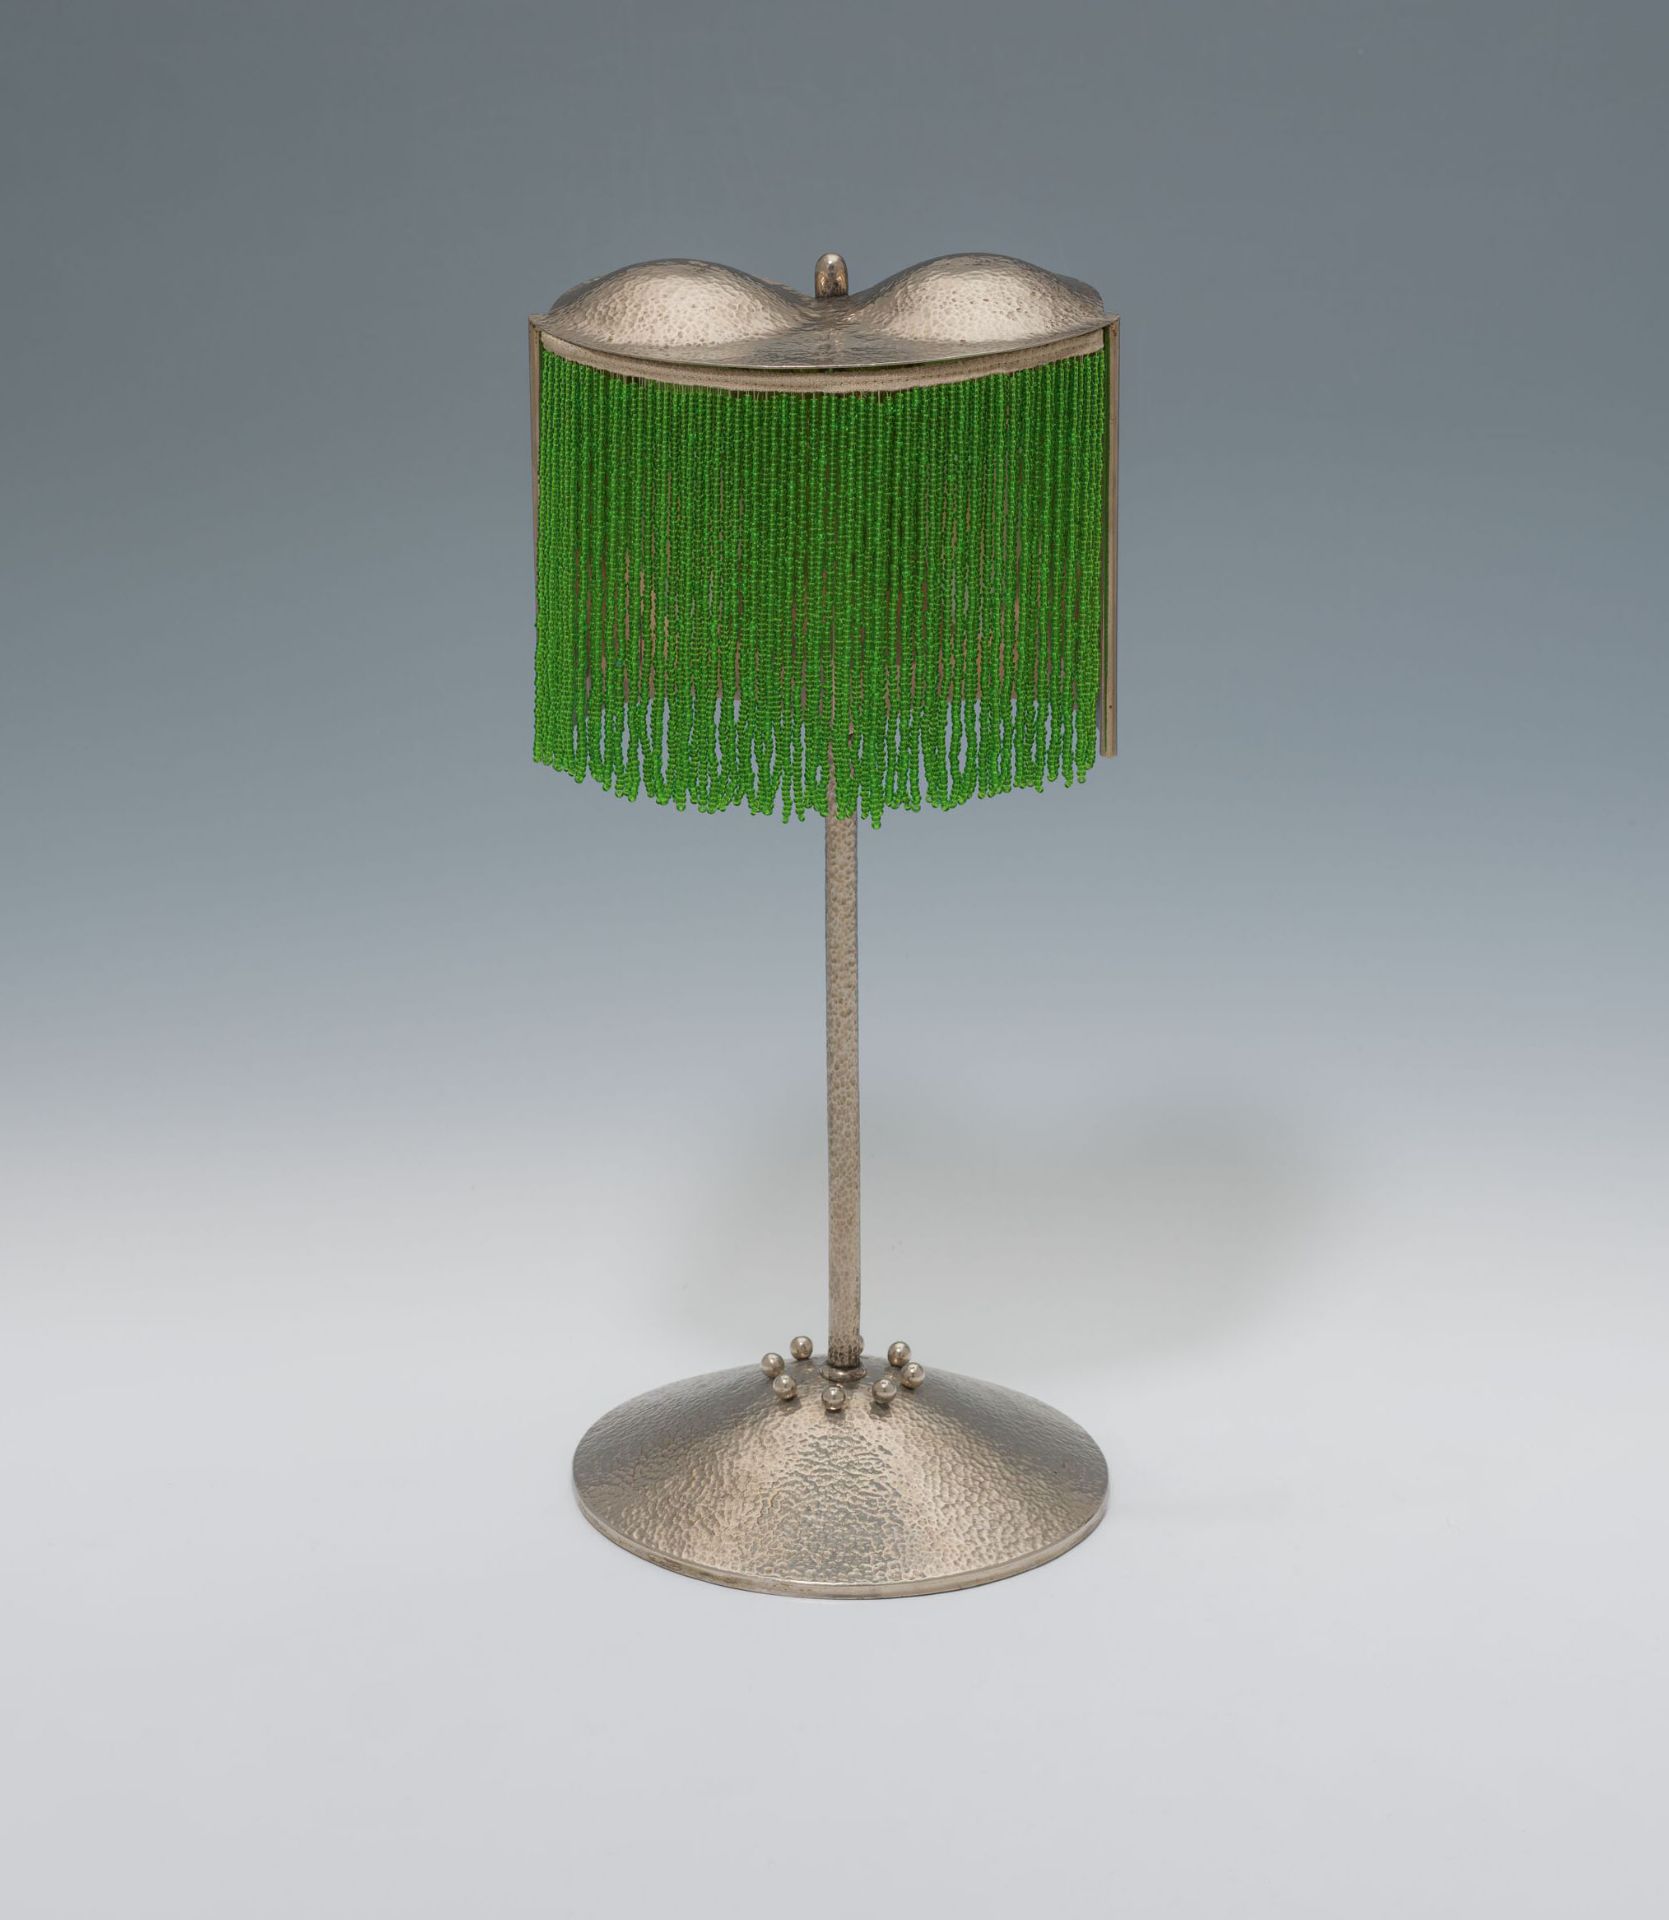 Josef HoffmannTable lamp (Candle holder)Wiener Werkstätte, 1905nickel plated brass, green glass